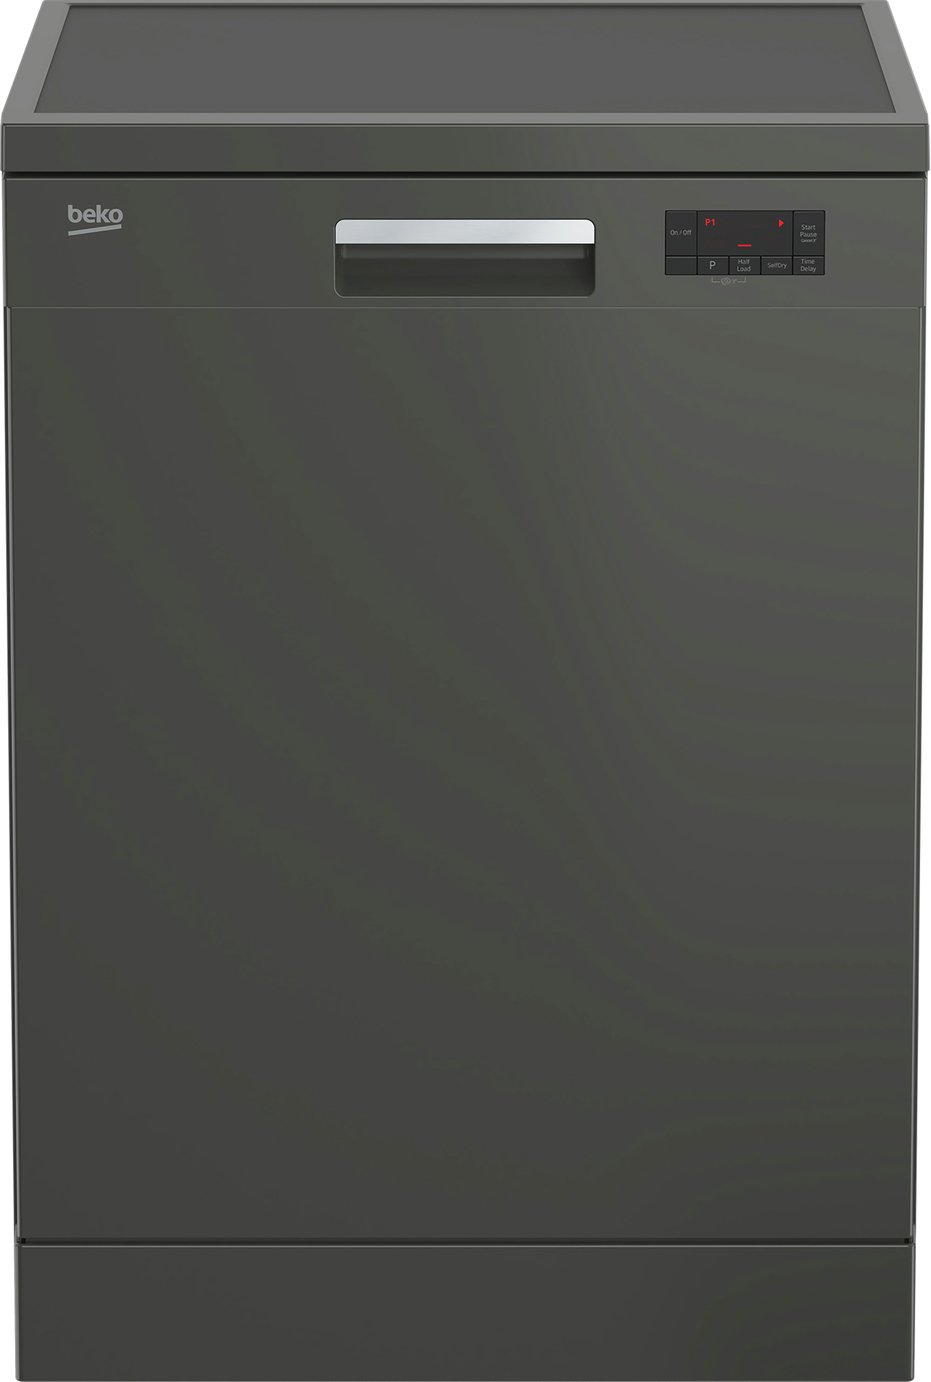 Beko DFN16430G Full Size Dishwasher Review